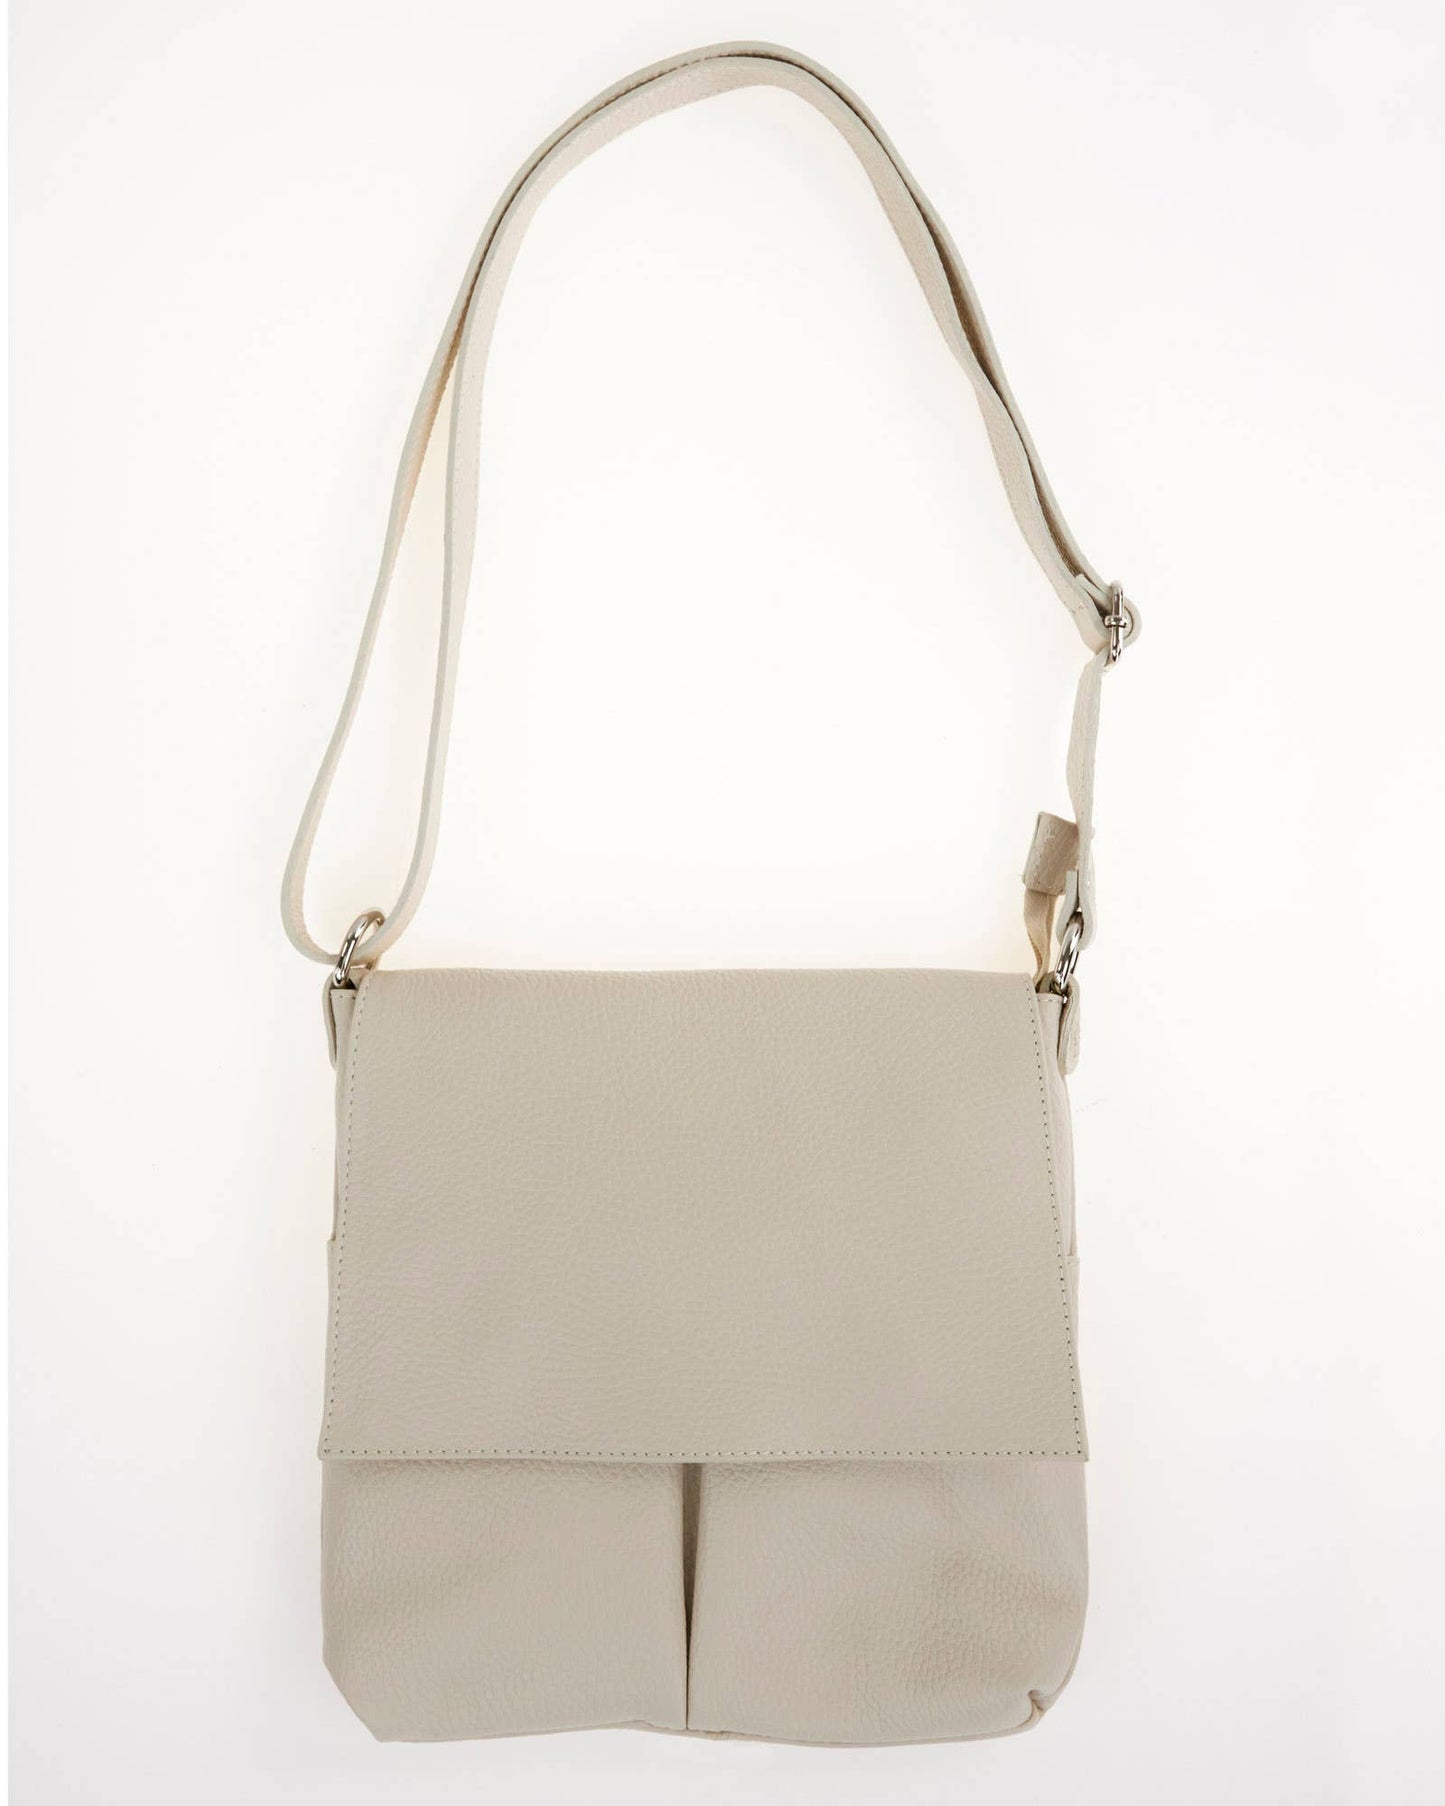 Cadenza Double Pocket Crossbody Leather Bag: White